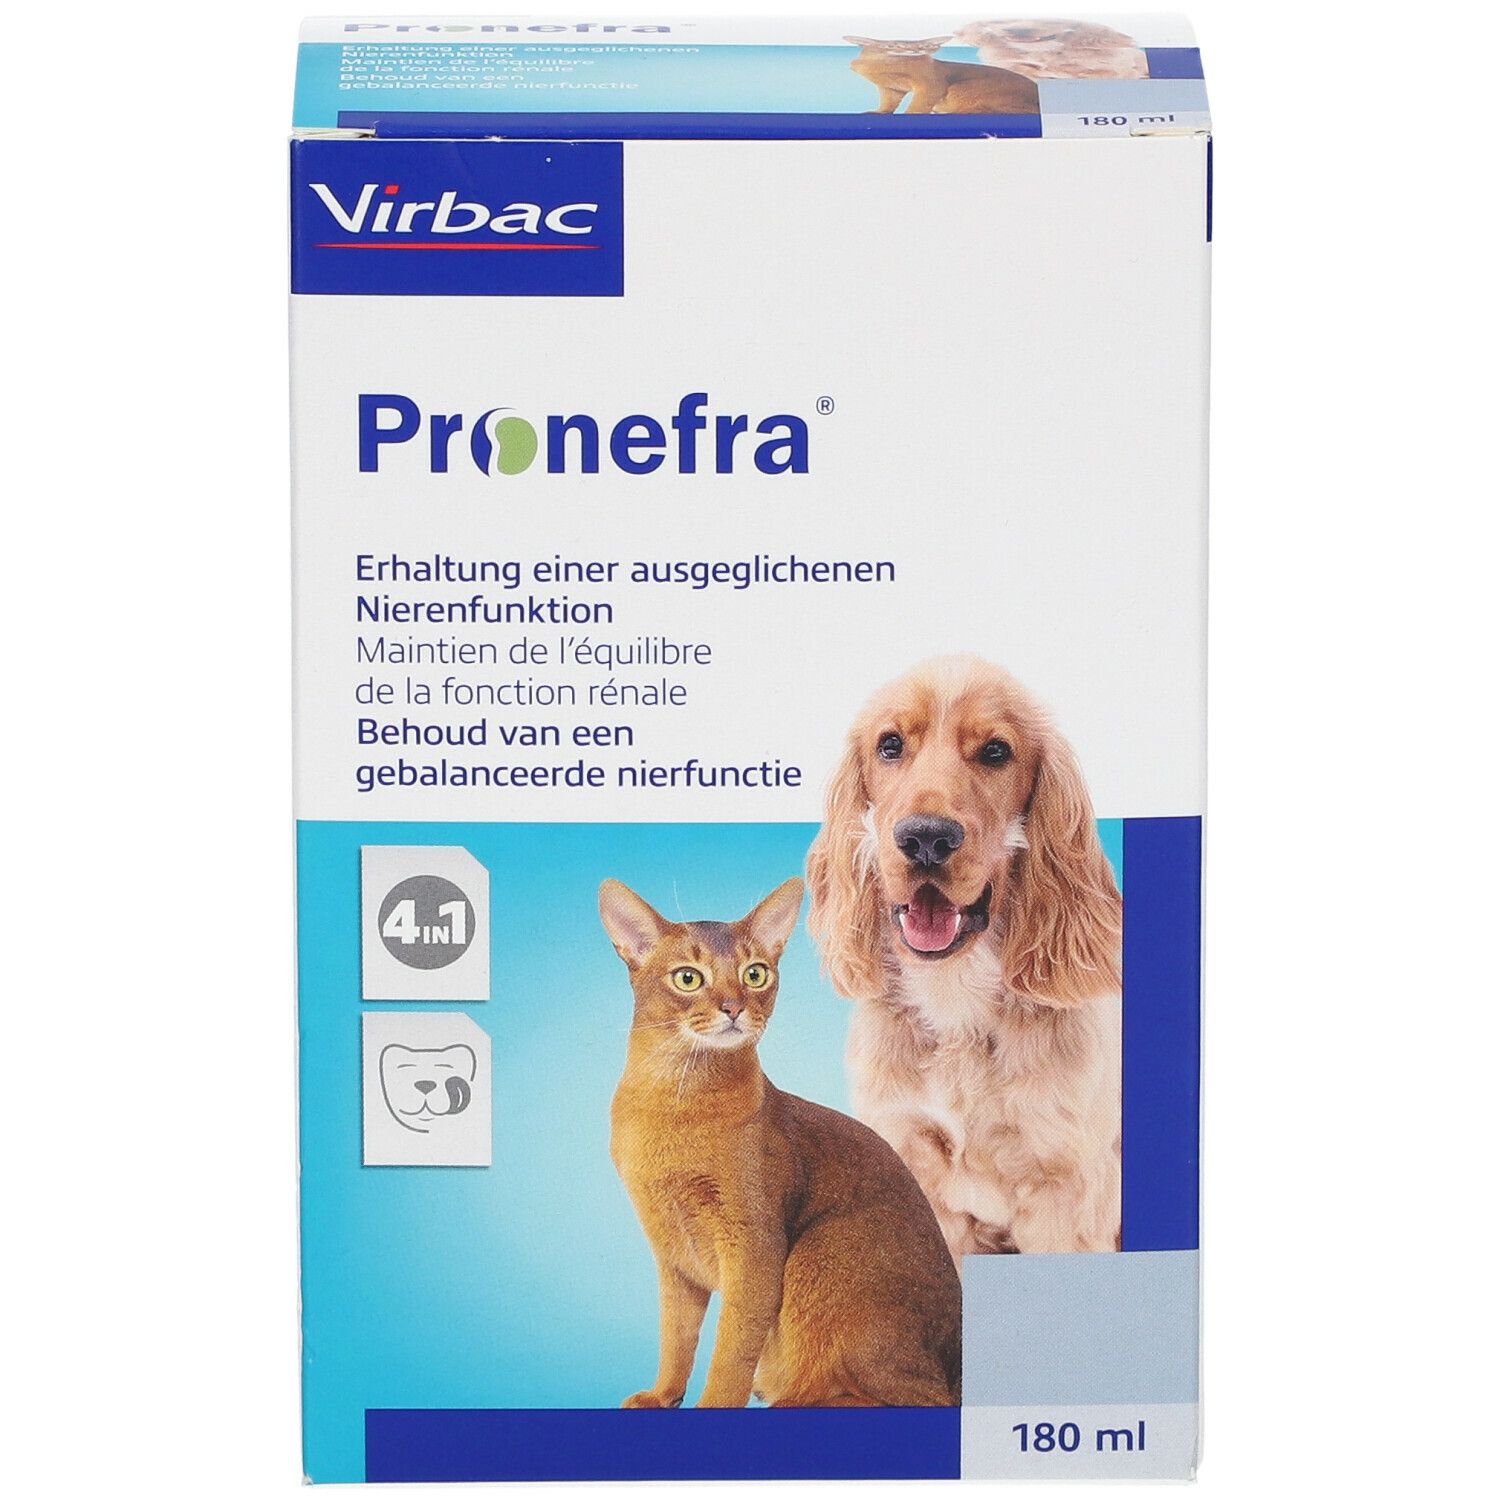 Virbac Pronefra®